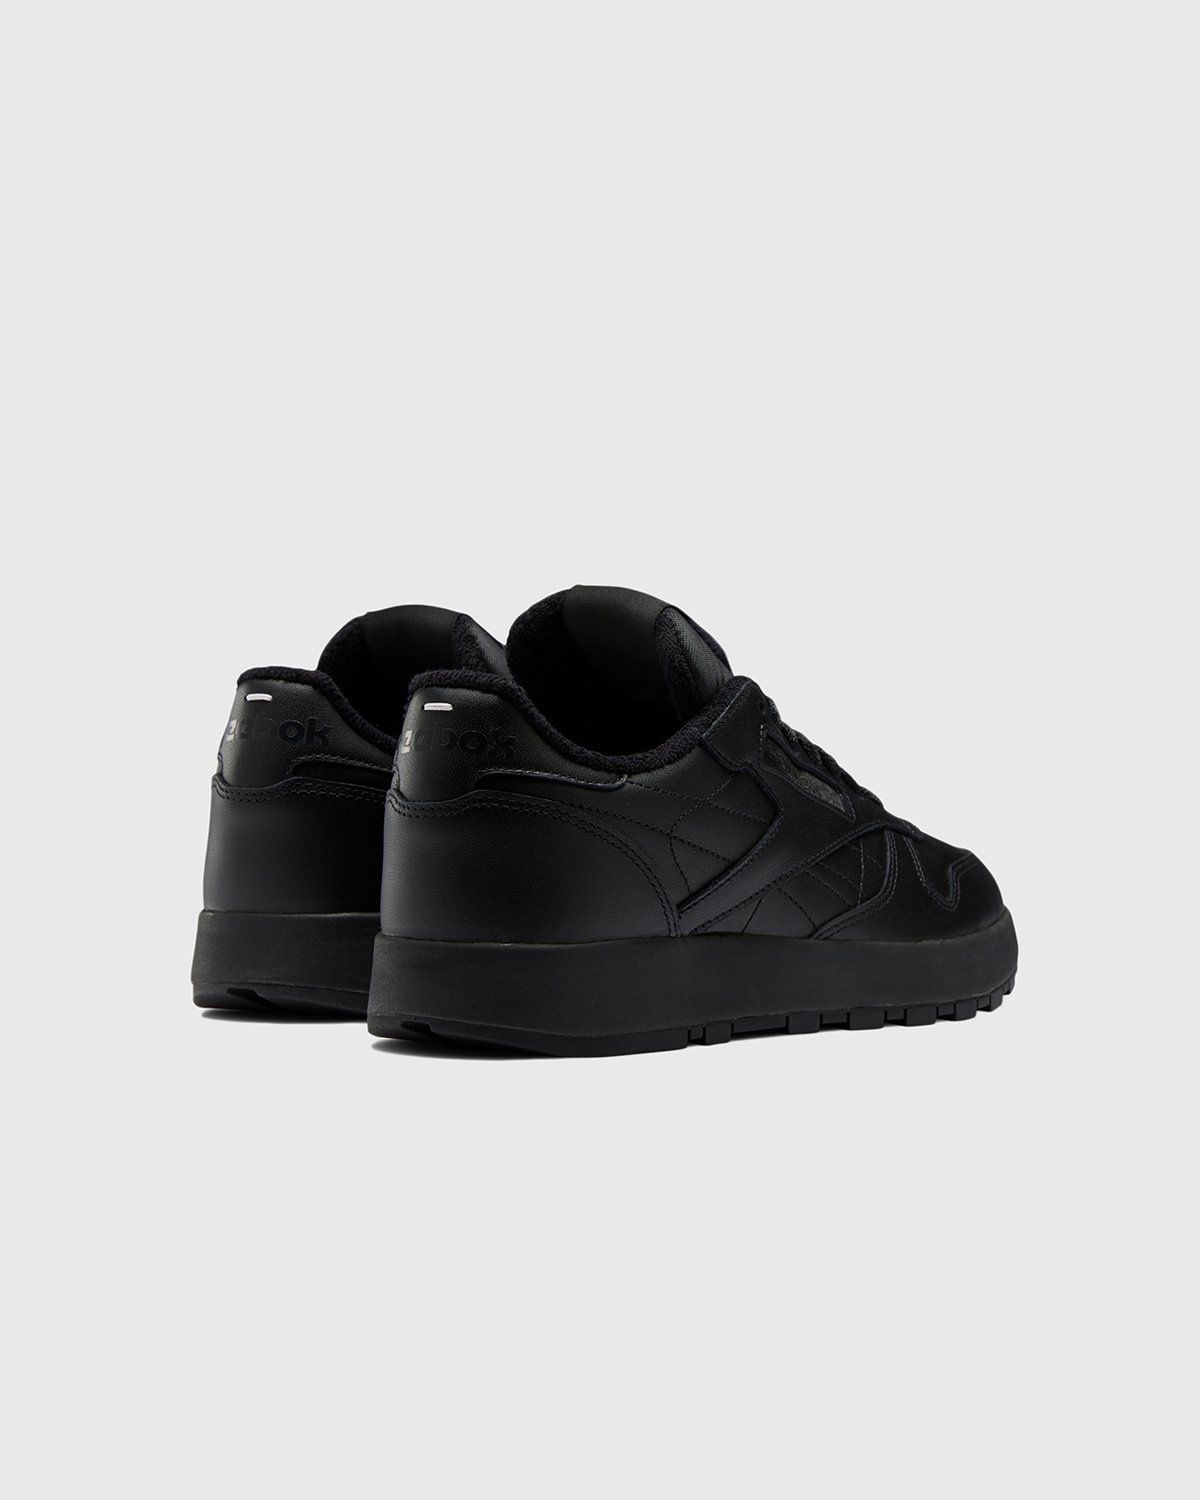 Maison Margiela x Reebok – Classic Leather Tabi Black - Low Top Sneakers - Black - Image 3